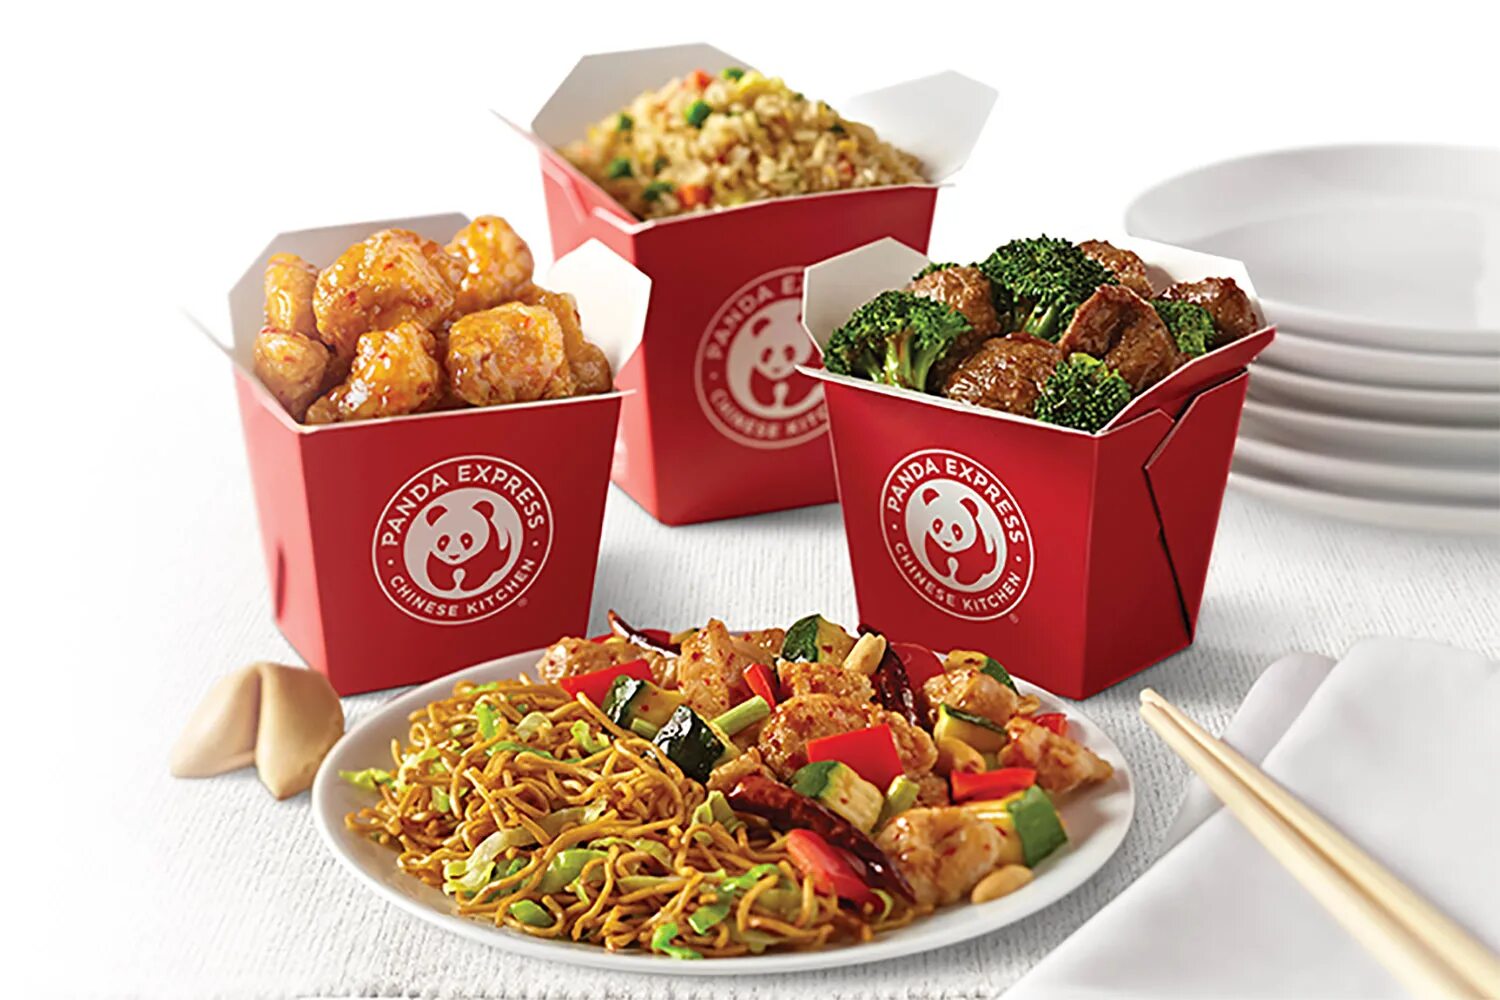 Панда экспресс еда. Китайская еда. Китайский фаст фуд. Китайская еда в коробочках в Америке.